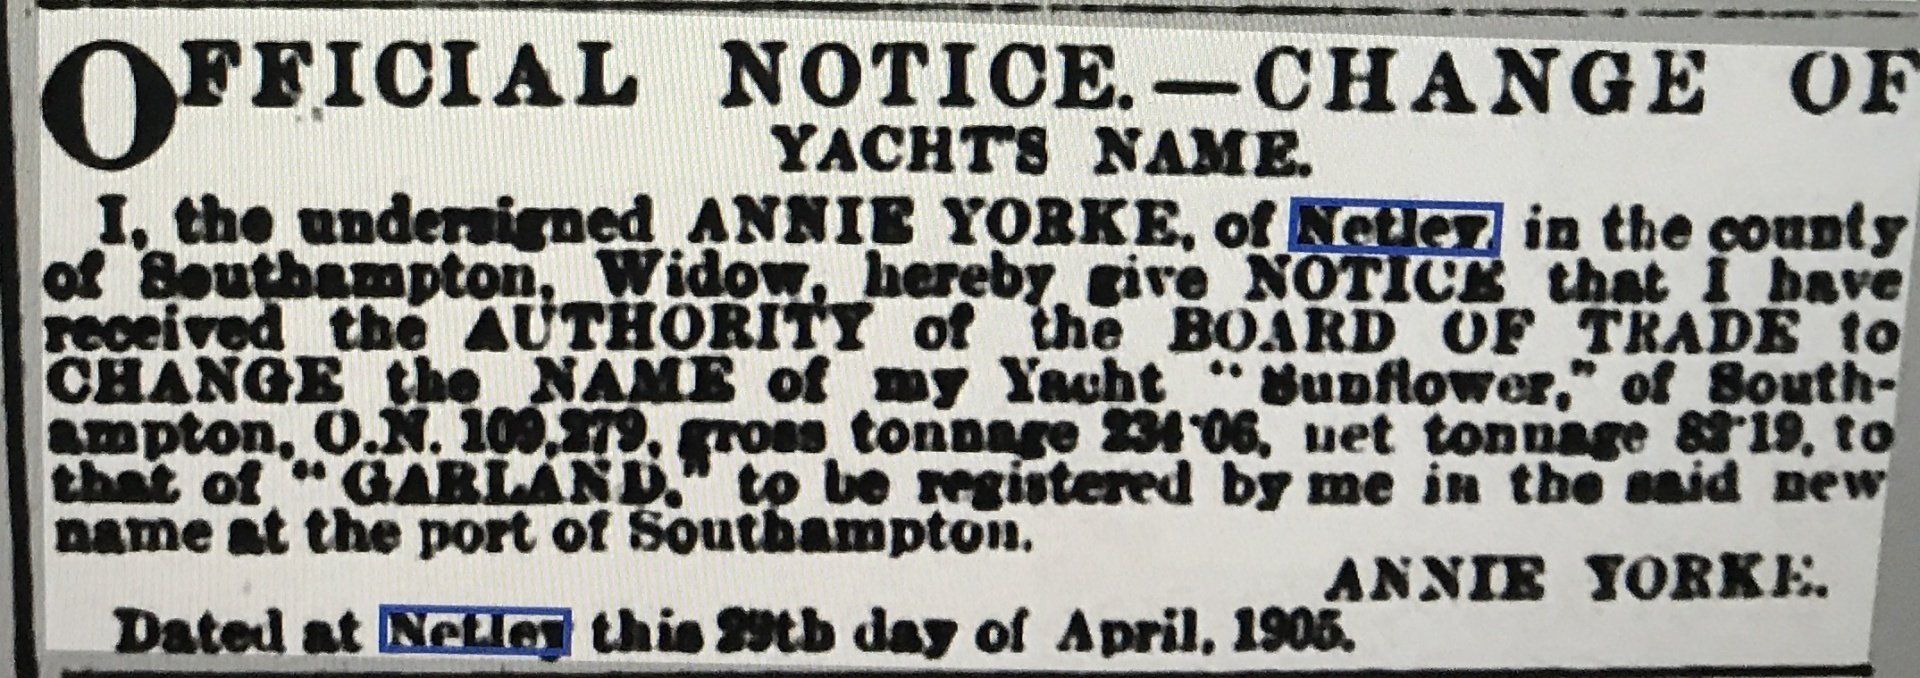 Mrs Yorke's Yacht 